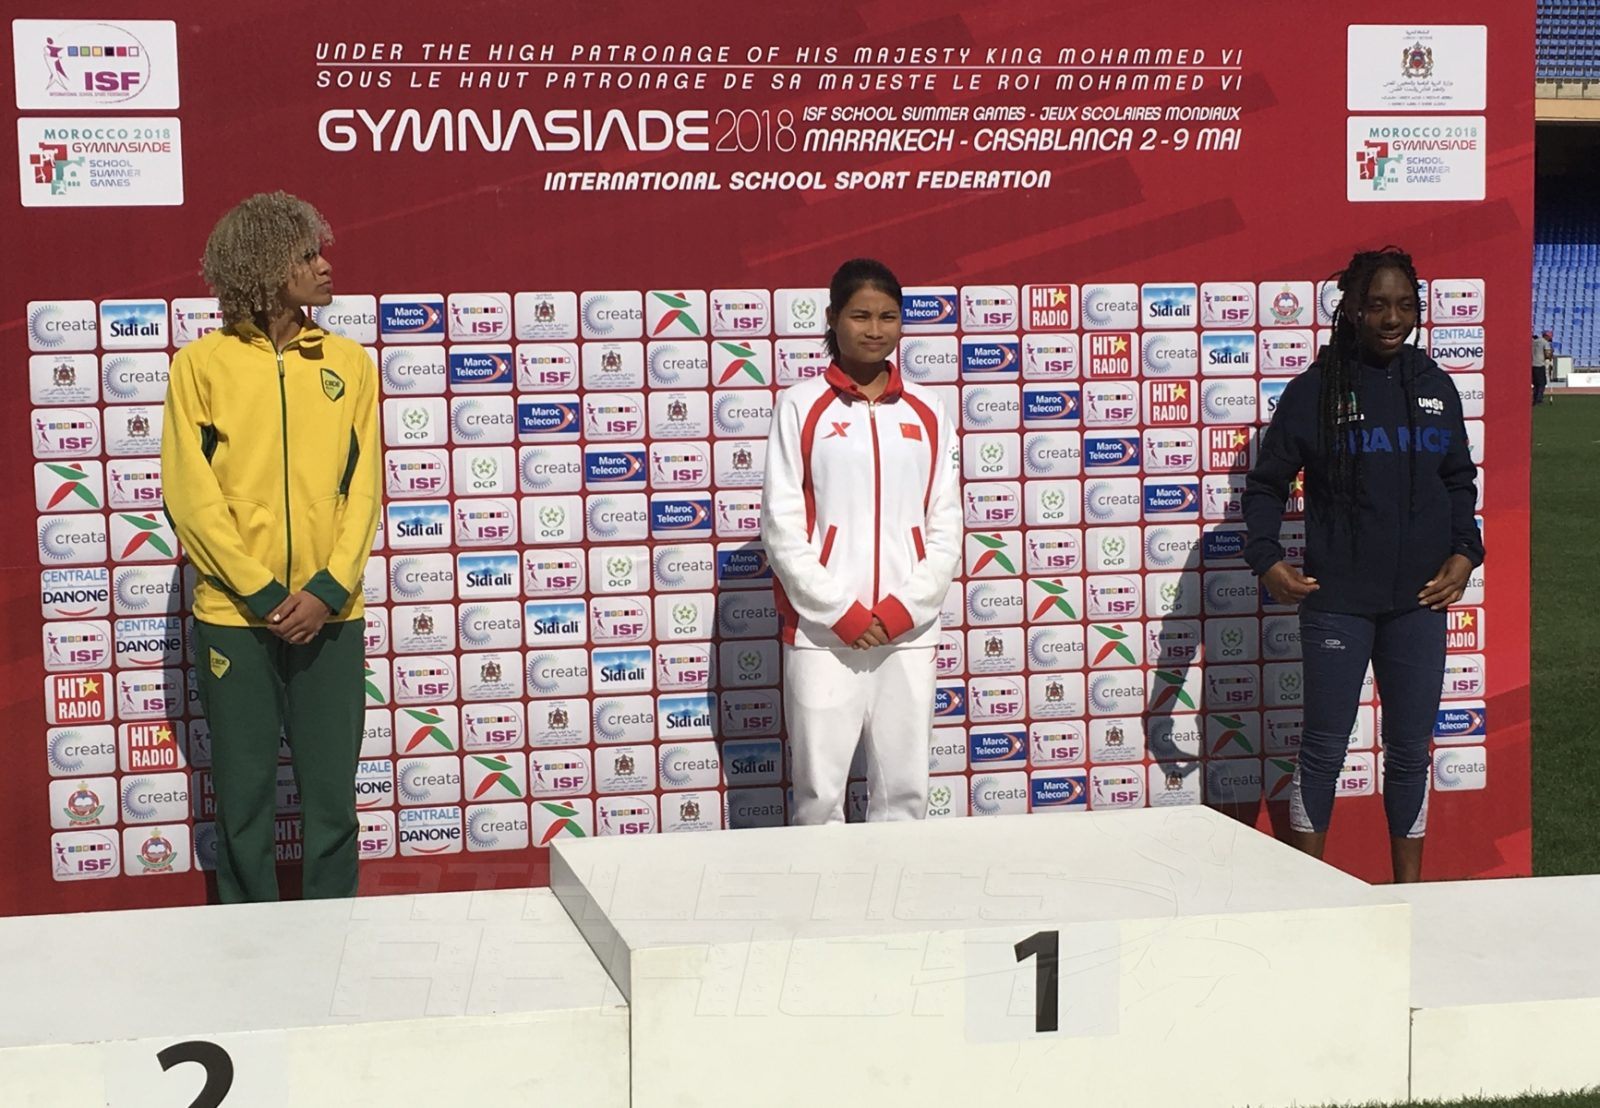 Medal presentation for the Girls 400m hurdles at the Gymnasiade 2018 / Photo Credit: Yomi Omogbeja